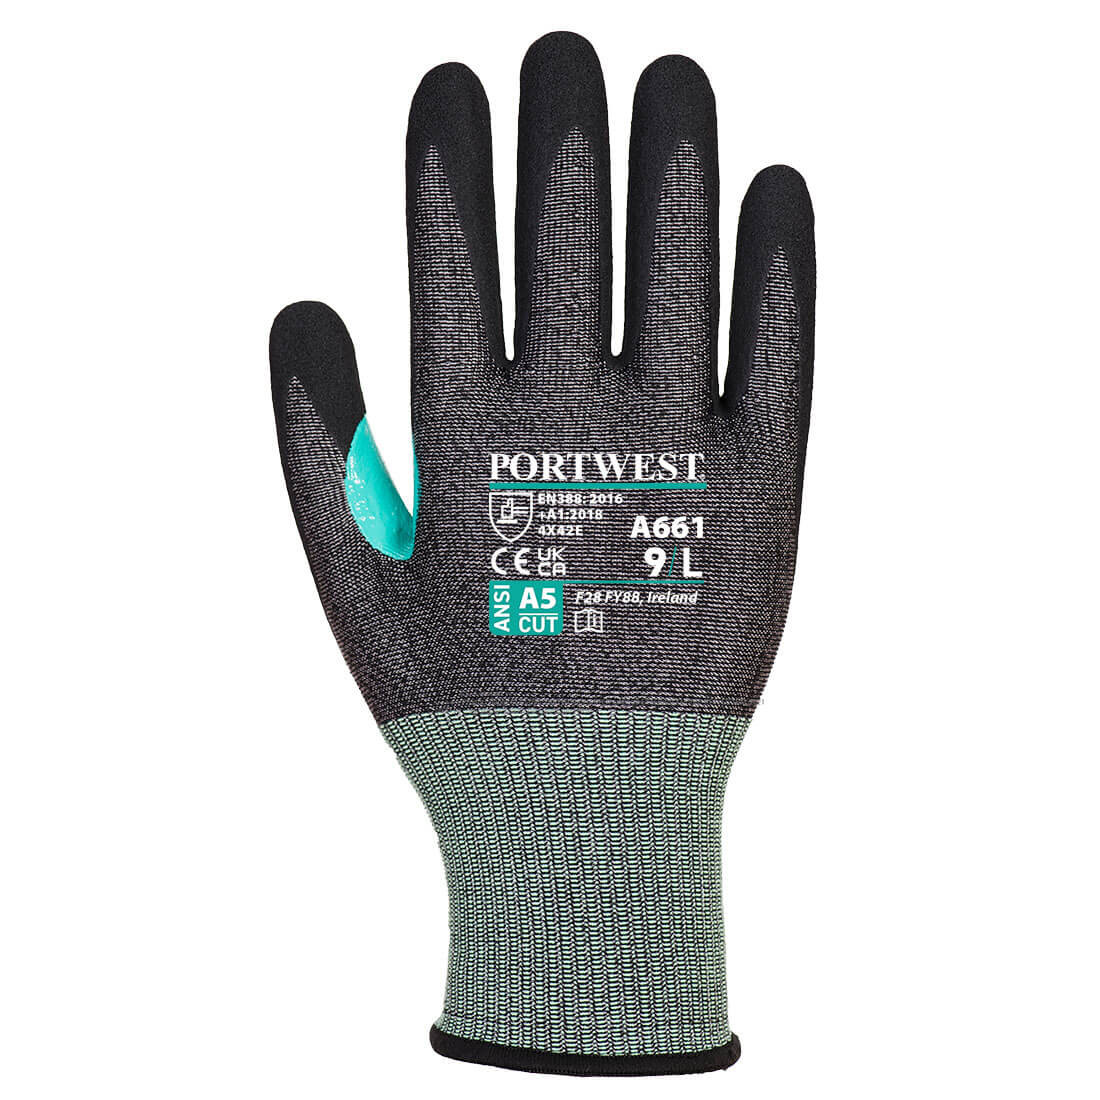 CS VHR18 Nitrile Foam Cut Glove - Personal protection